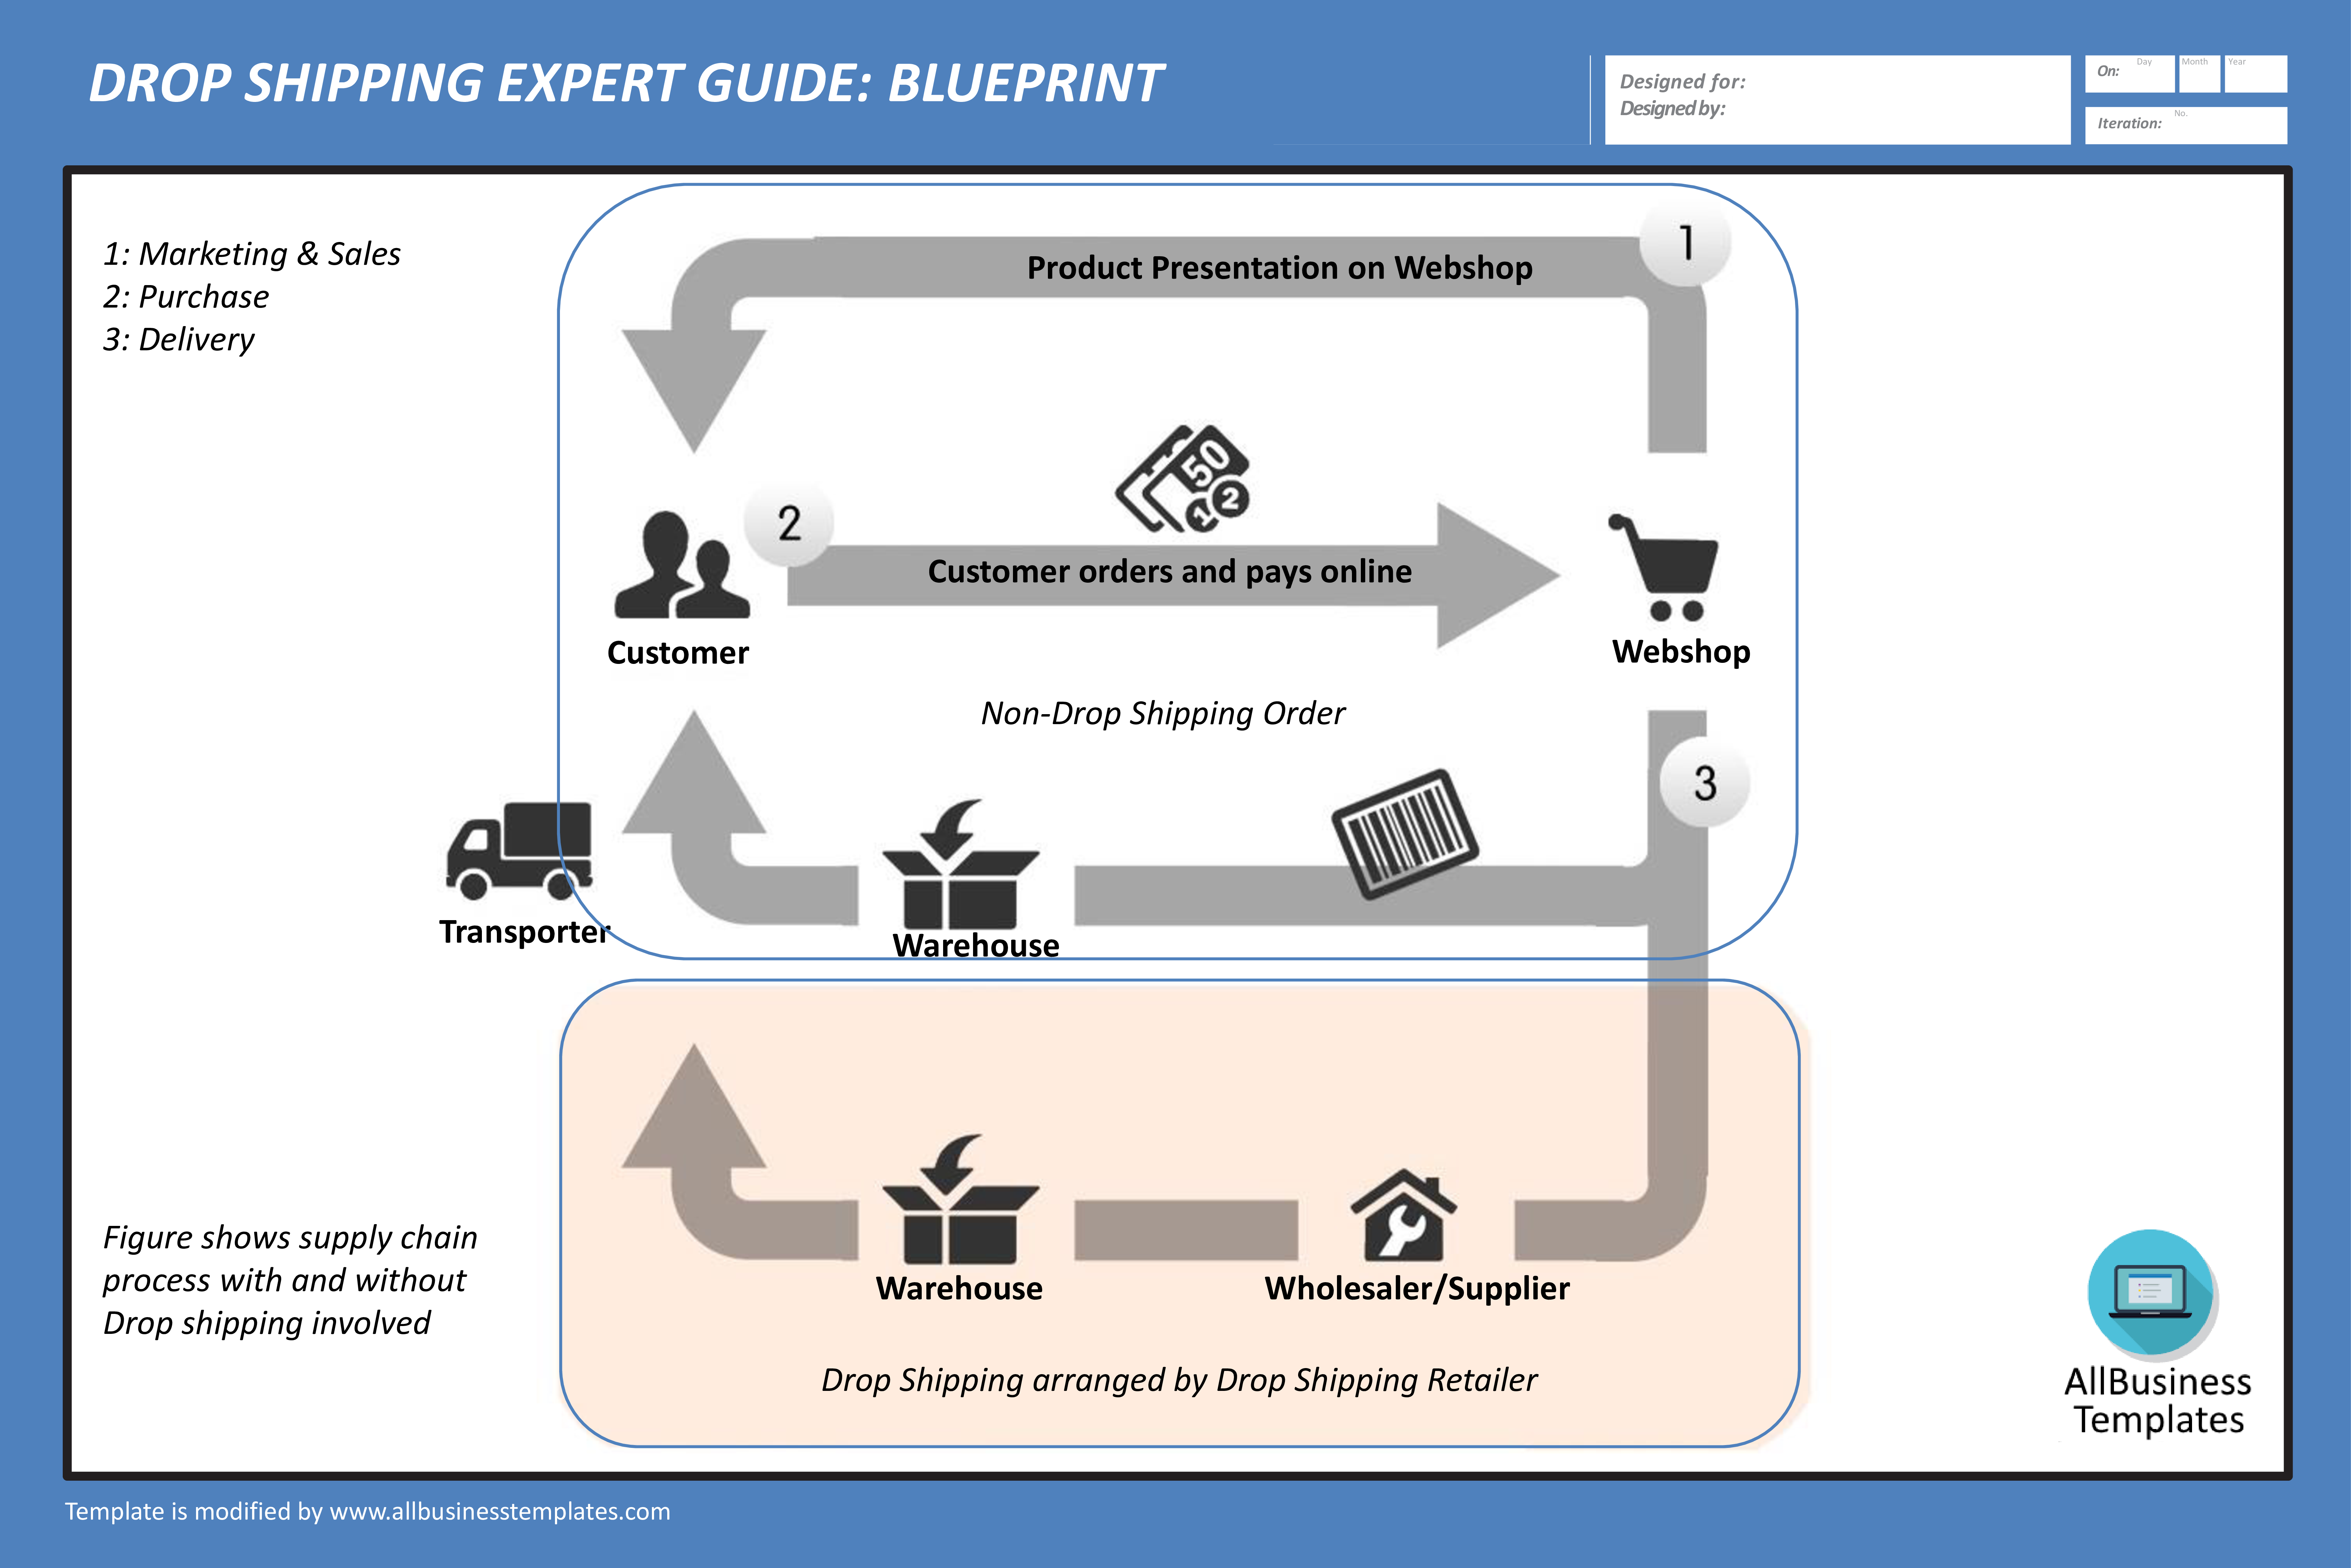 Drop Shipping Expert Guide Blueprint main image